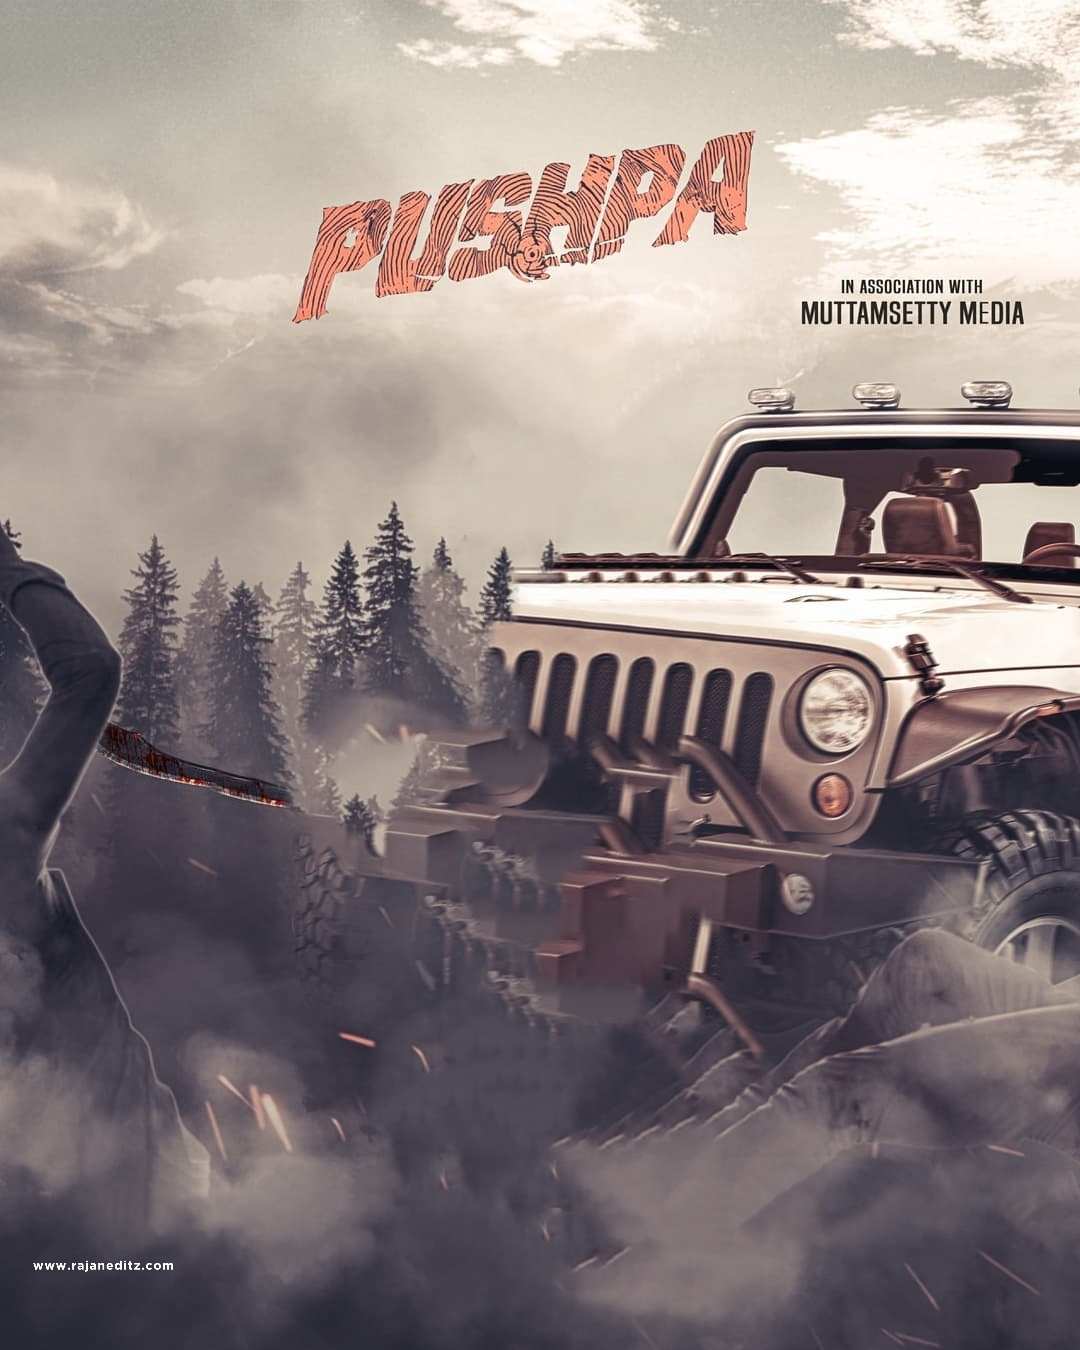 pushpa movie poster backgrounds__New movie poster backgrounds__Raviraj kashyap editing backgrounds__Rjan editz 